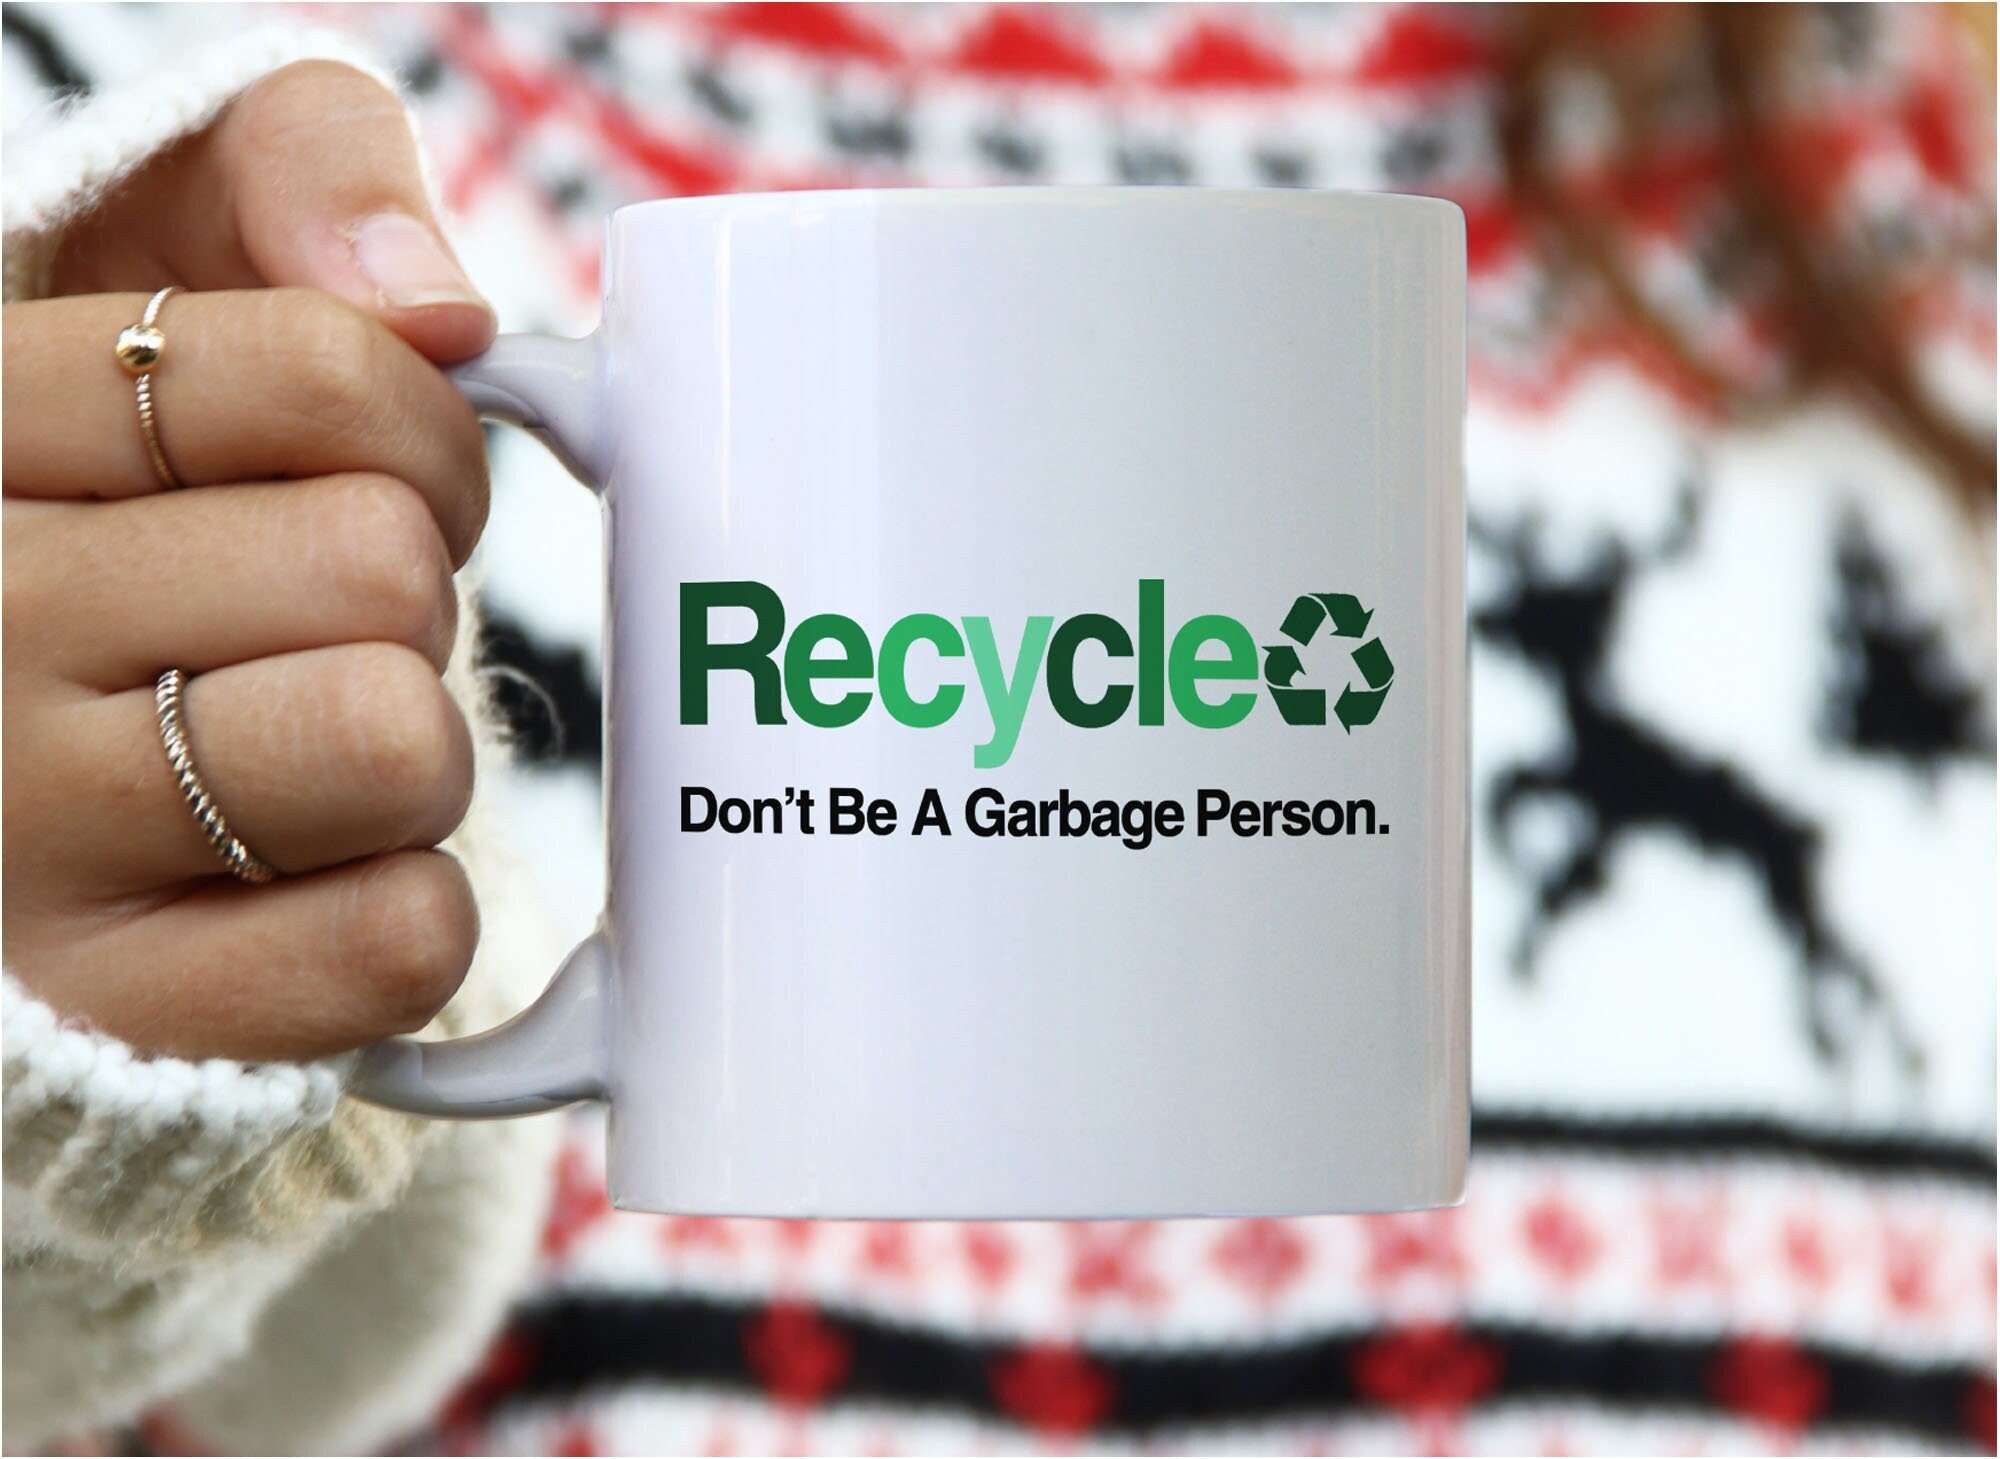 Reduce reuse recycle coffee mug